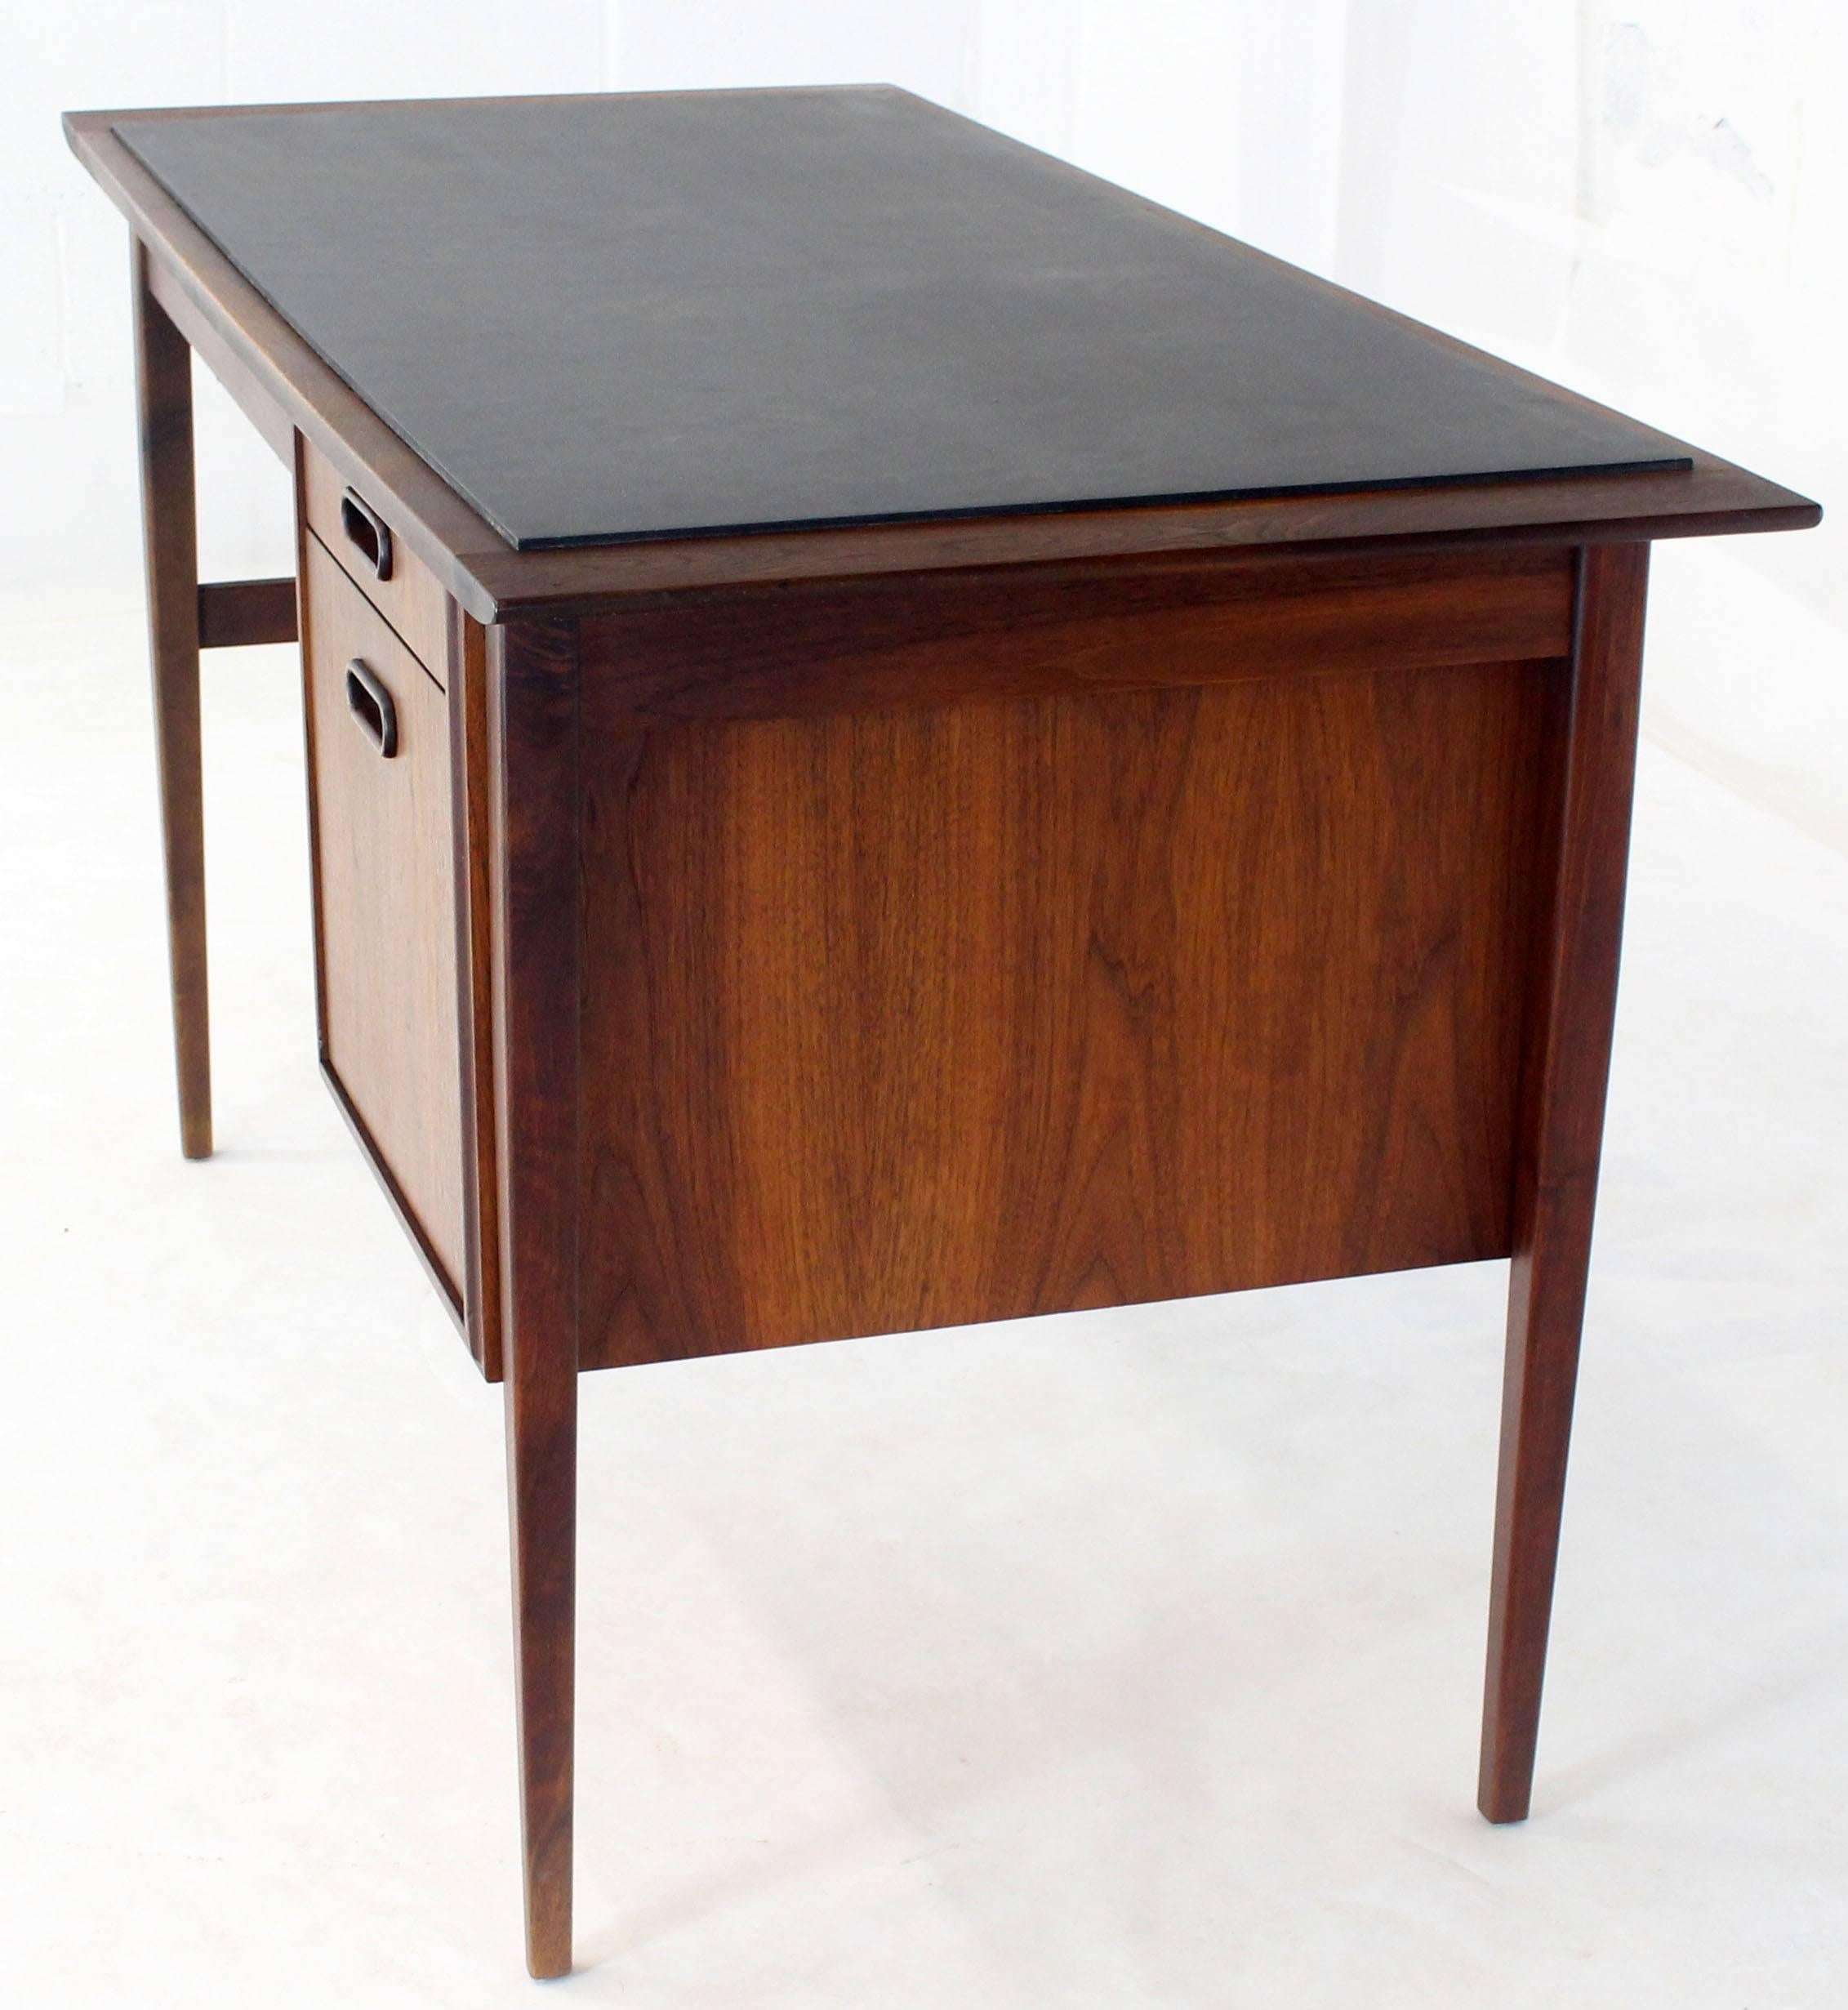 Danish Mid-Century Modern oiled walnut desk with slate top. Beautiful solid walnut tapered legs.